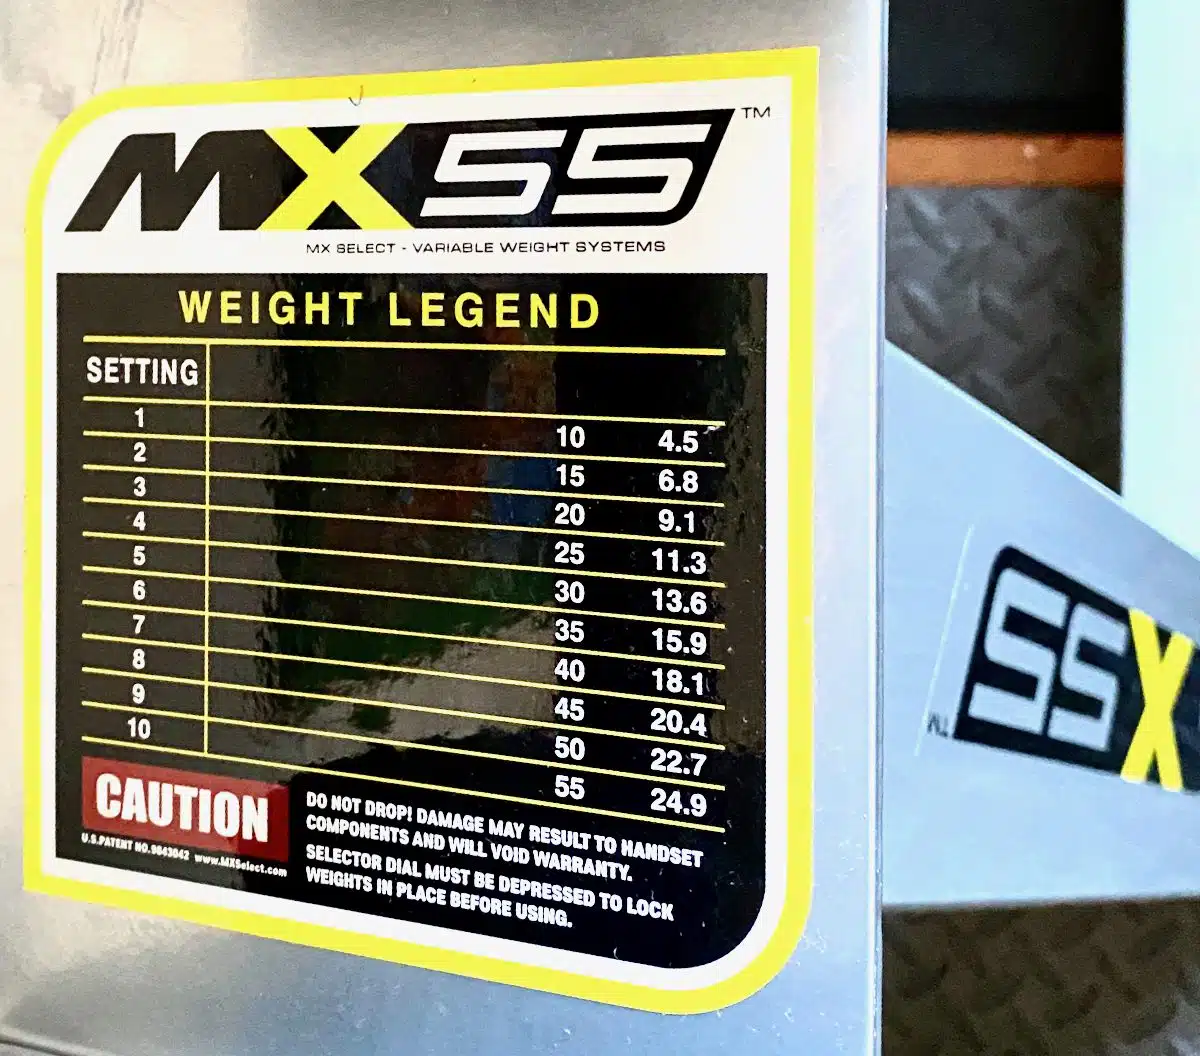 MX55 adjustable dumbbells weight legend